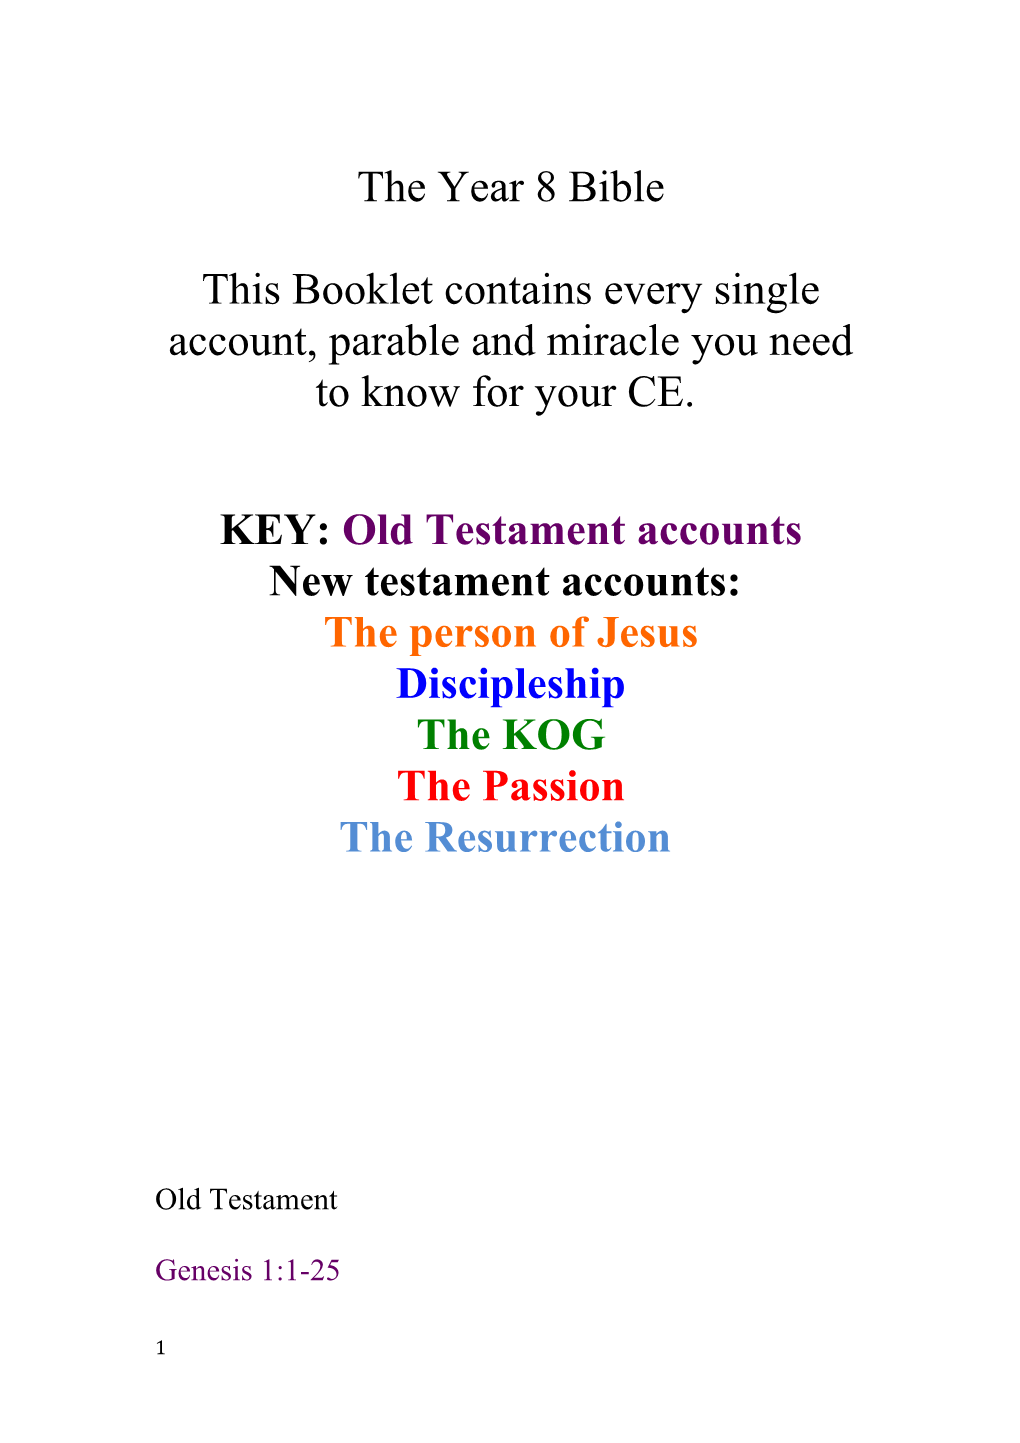 KEY:Old Testament Accounts